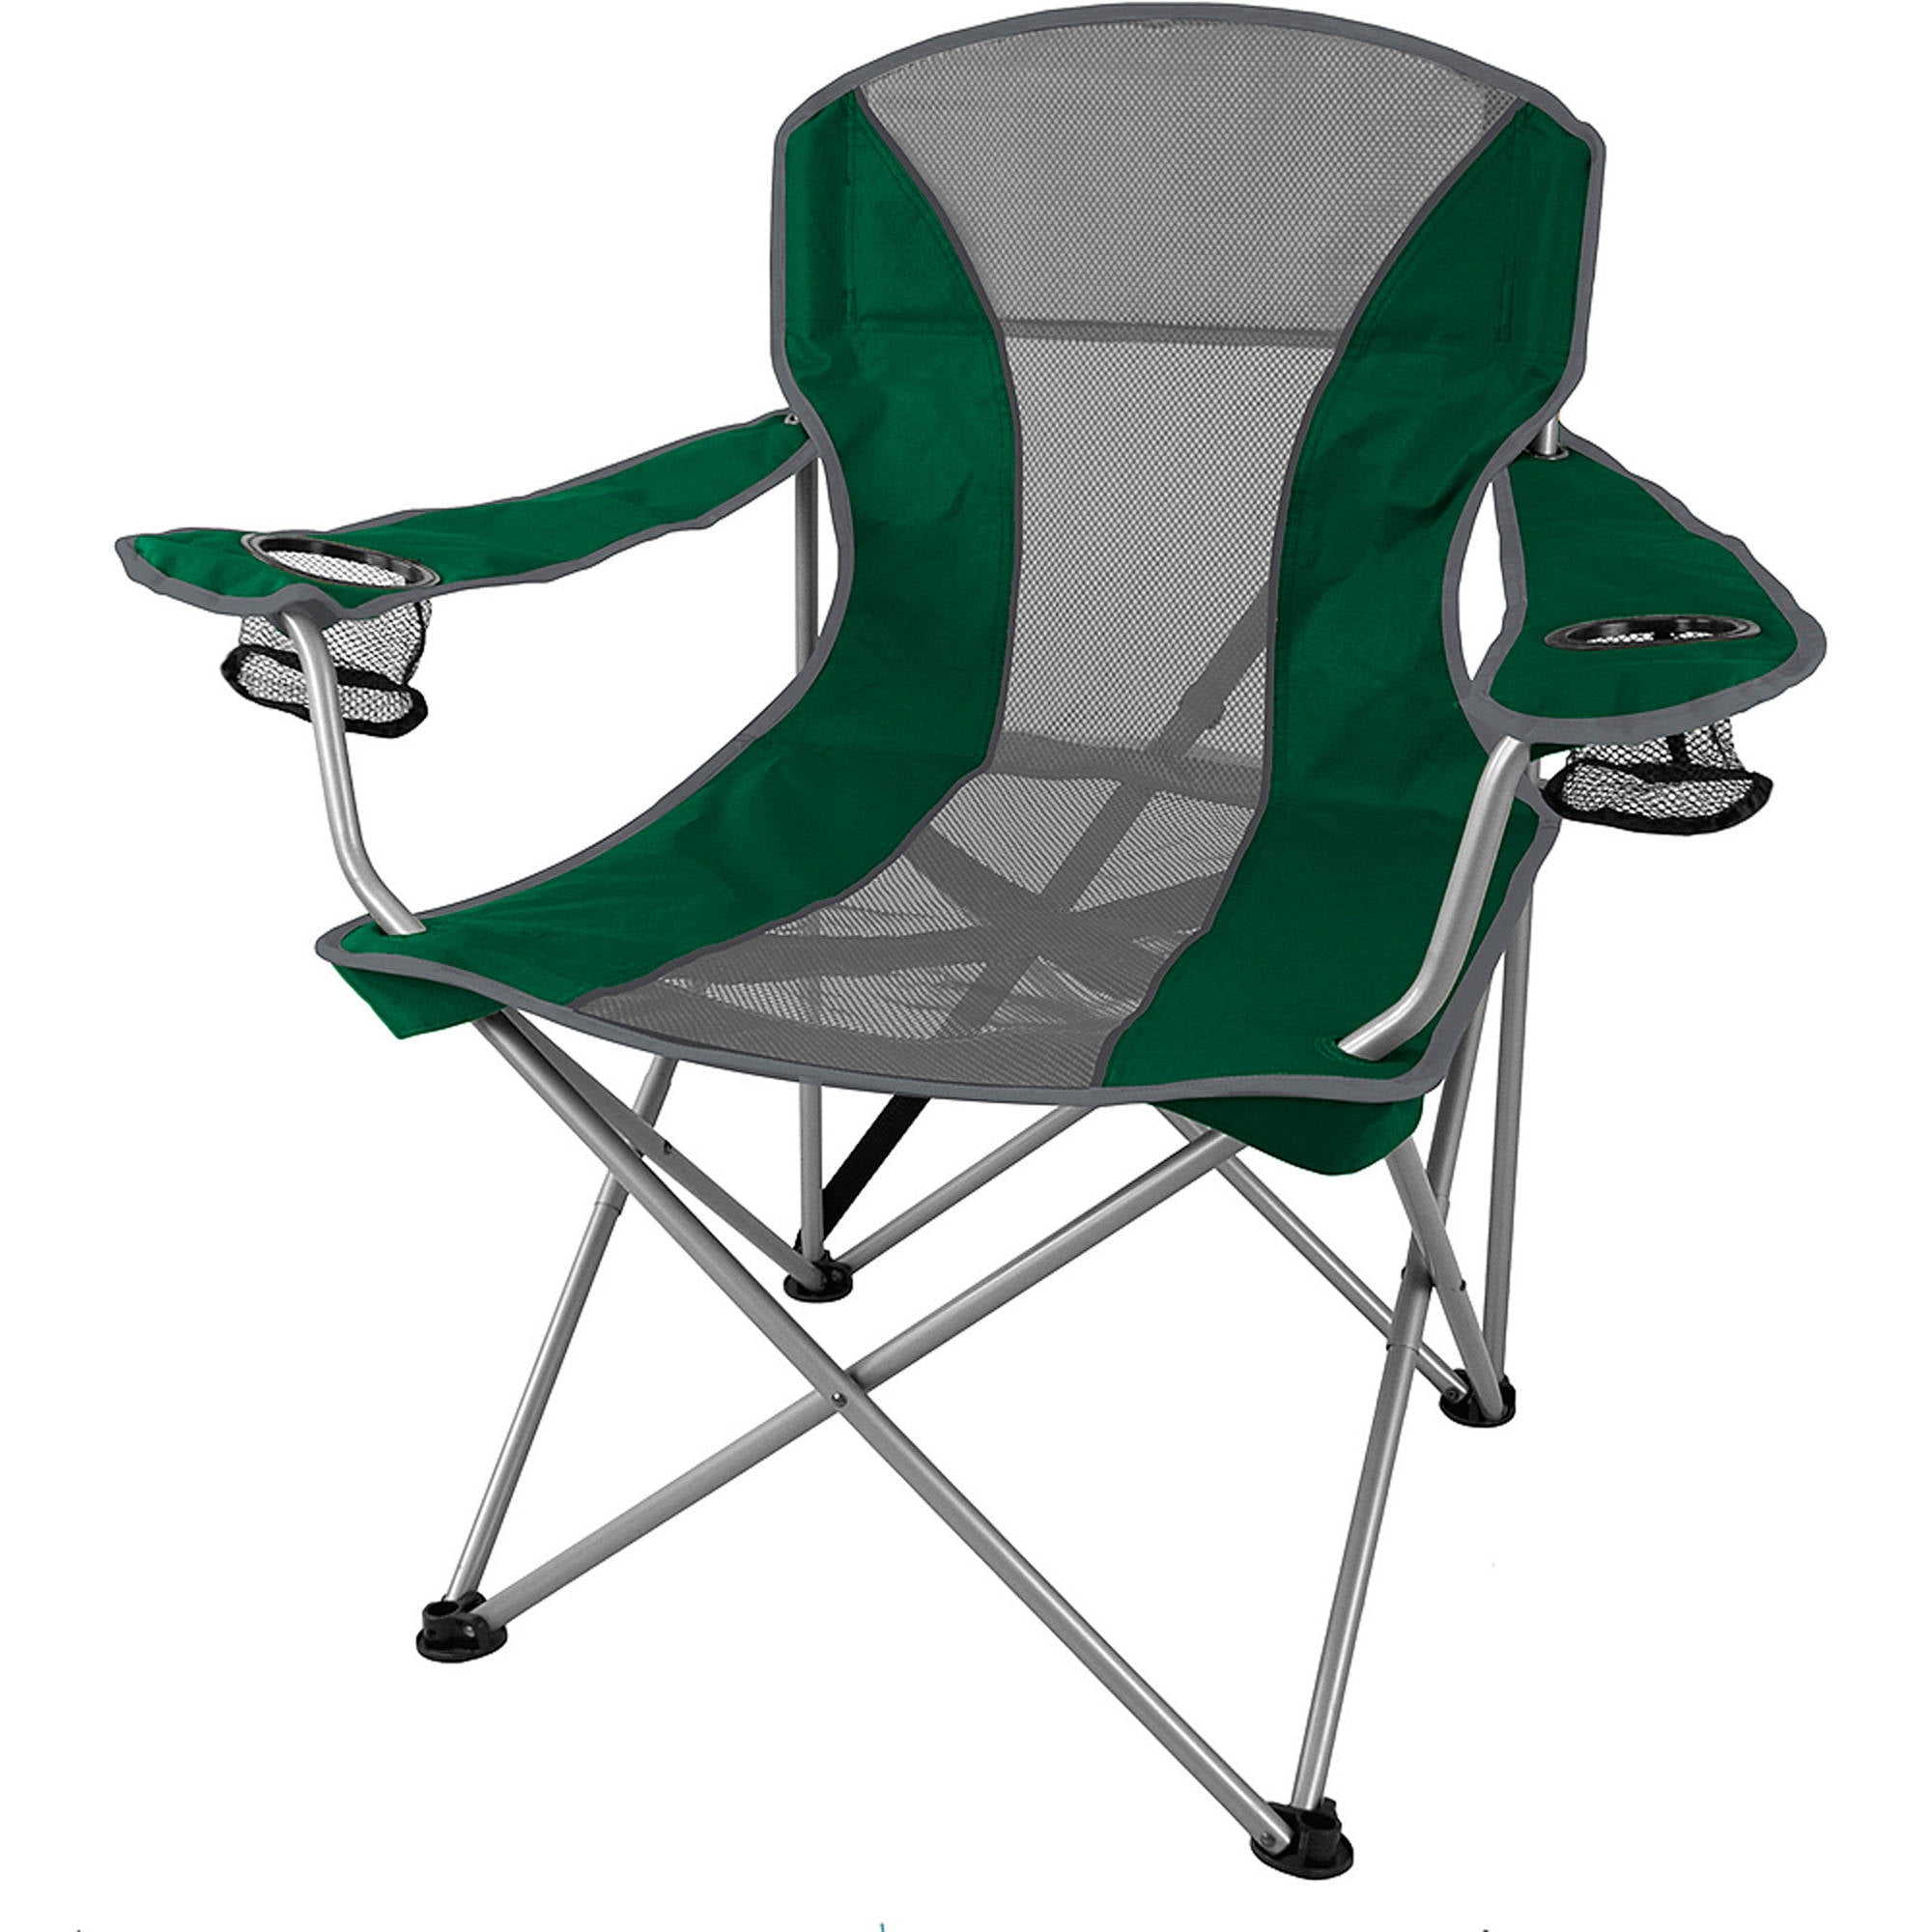 Hammock Camping Chair Costco Off 54